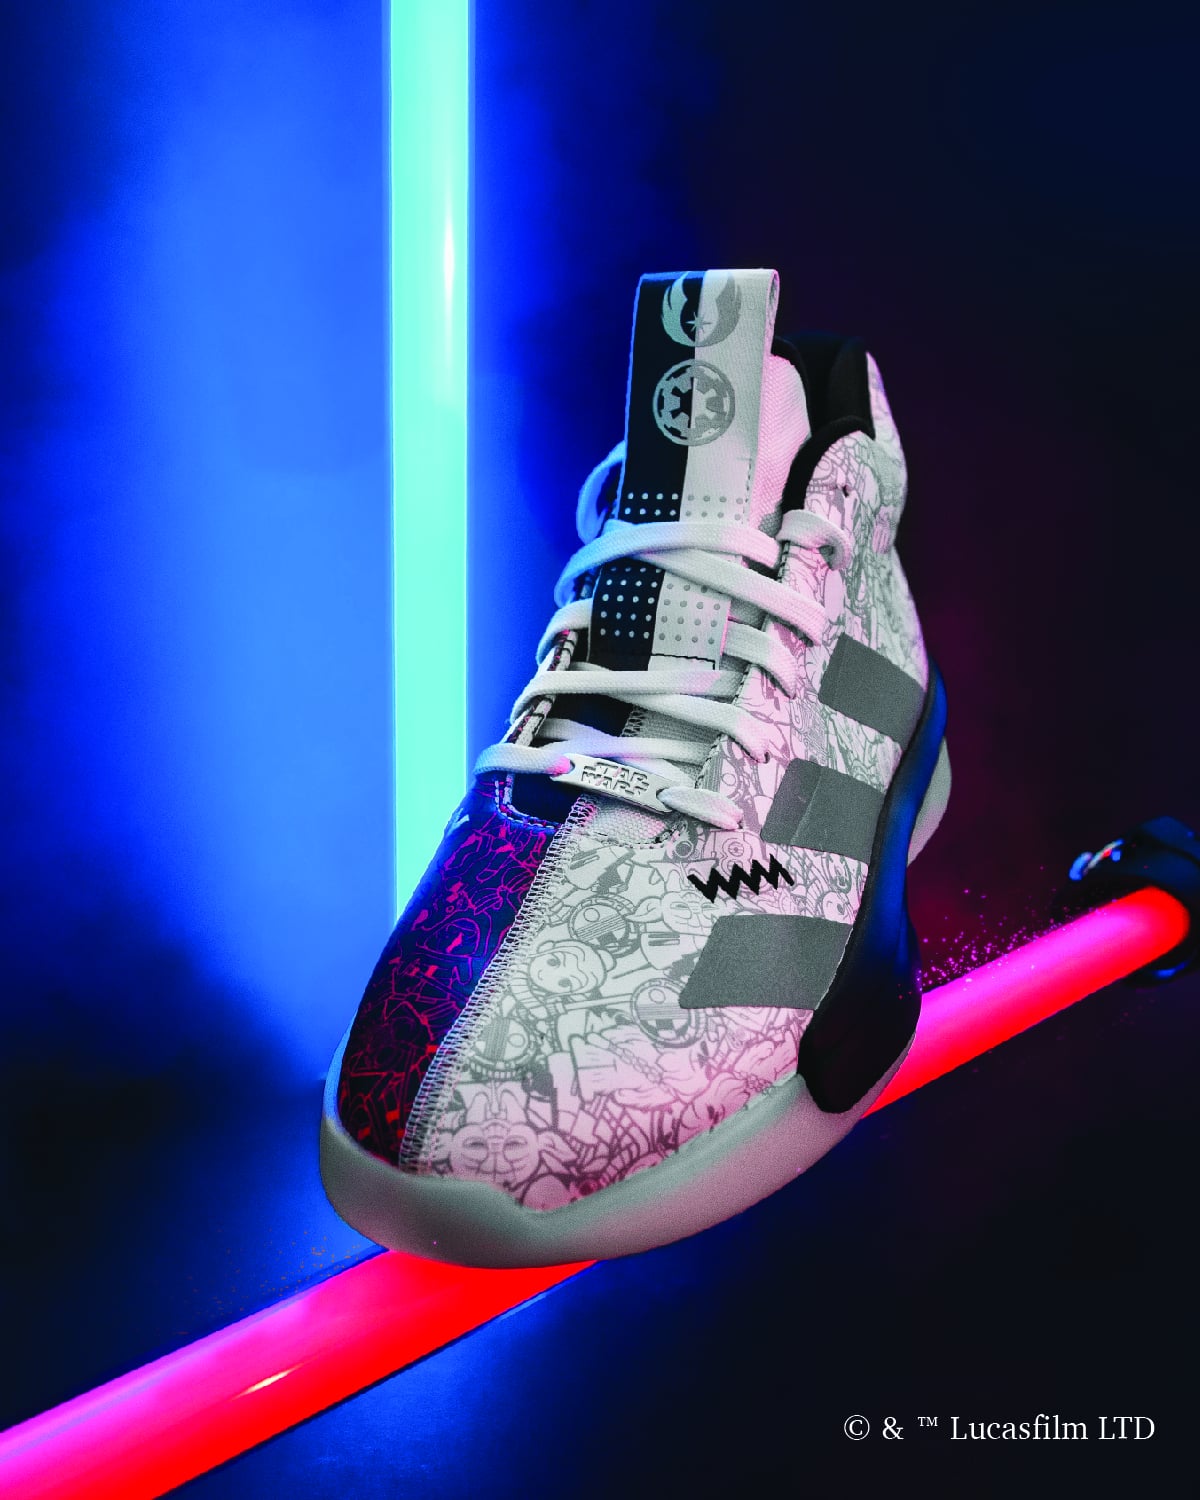 Betasten Koe Het strand Star Wars x Adidas 2019 Sneaker and Clothing Collection | POPSUGAR Fashion